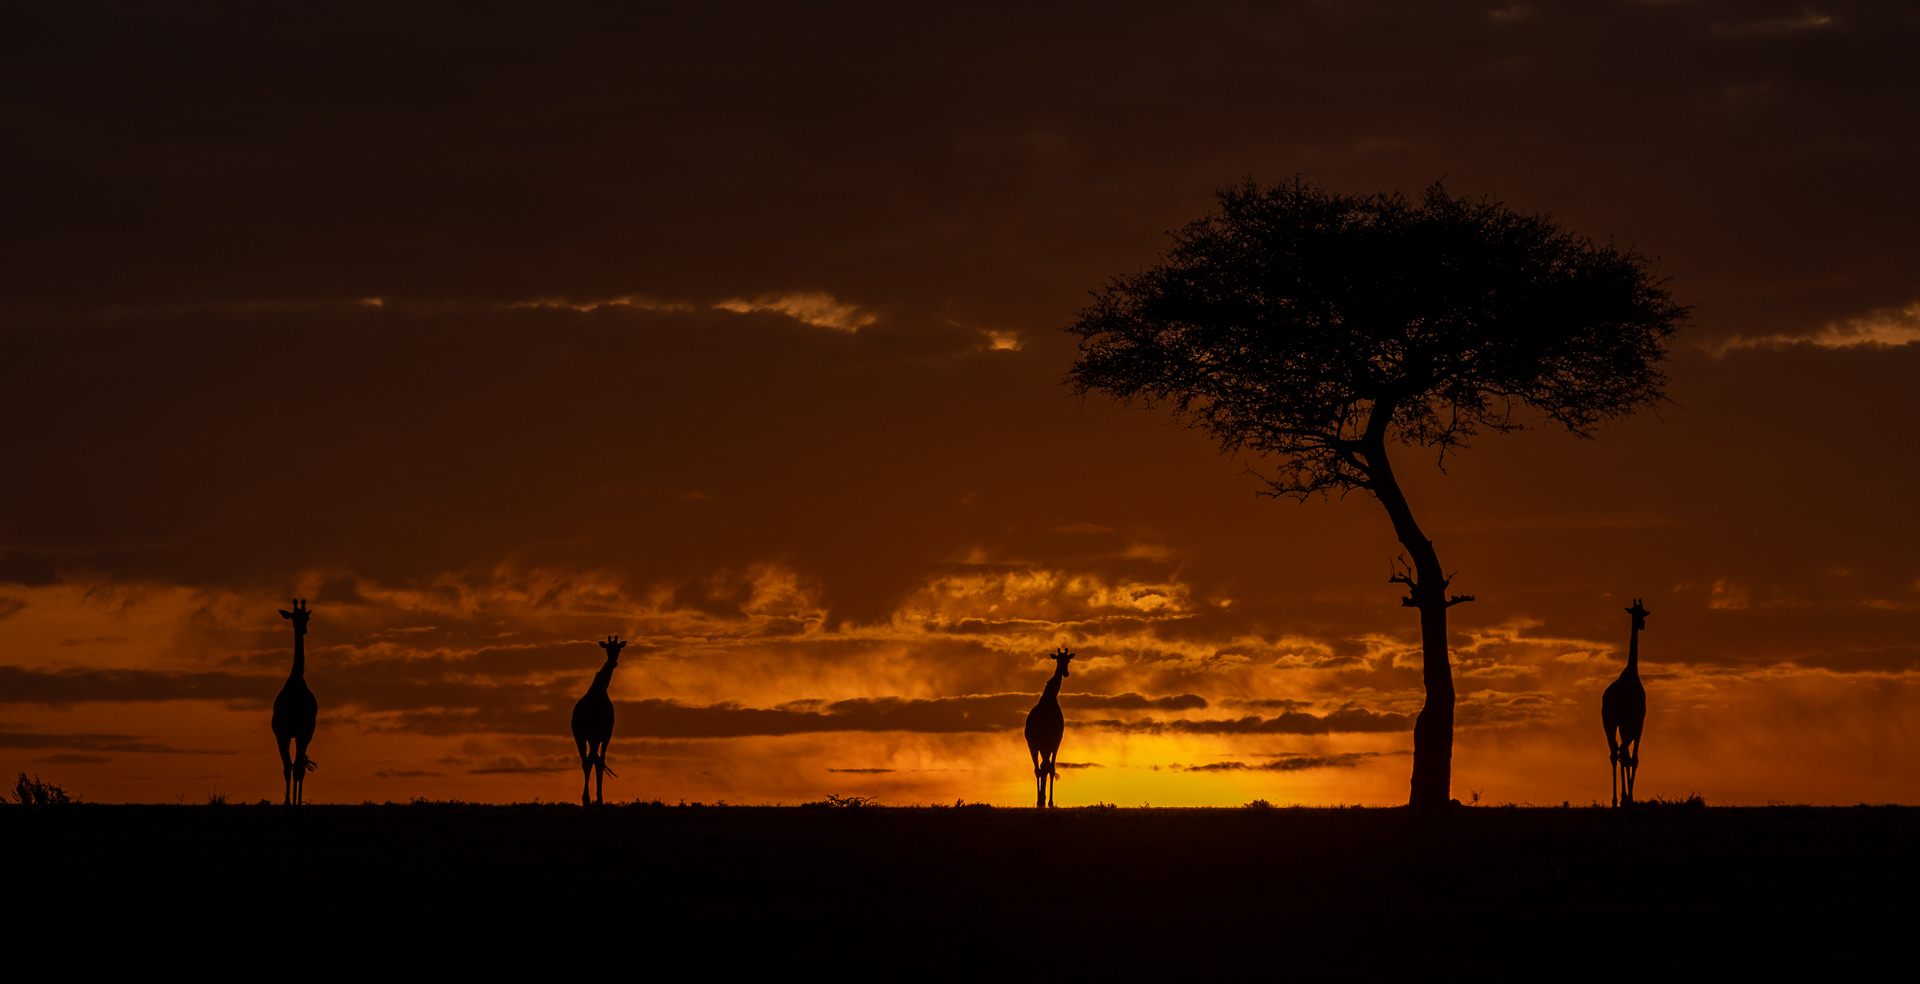 Tiny giraffes at the first light